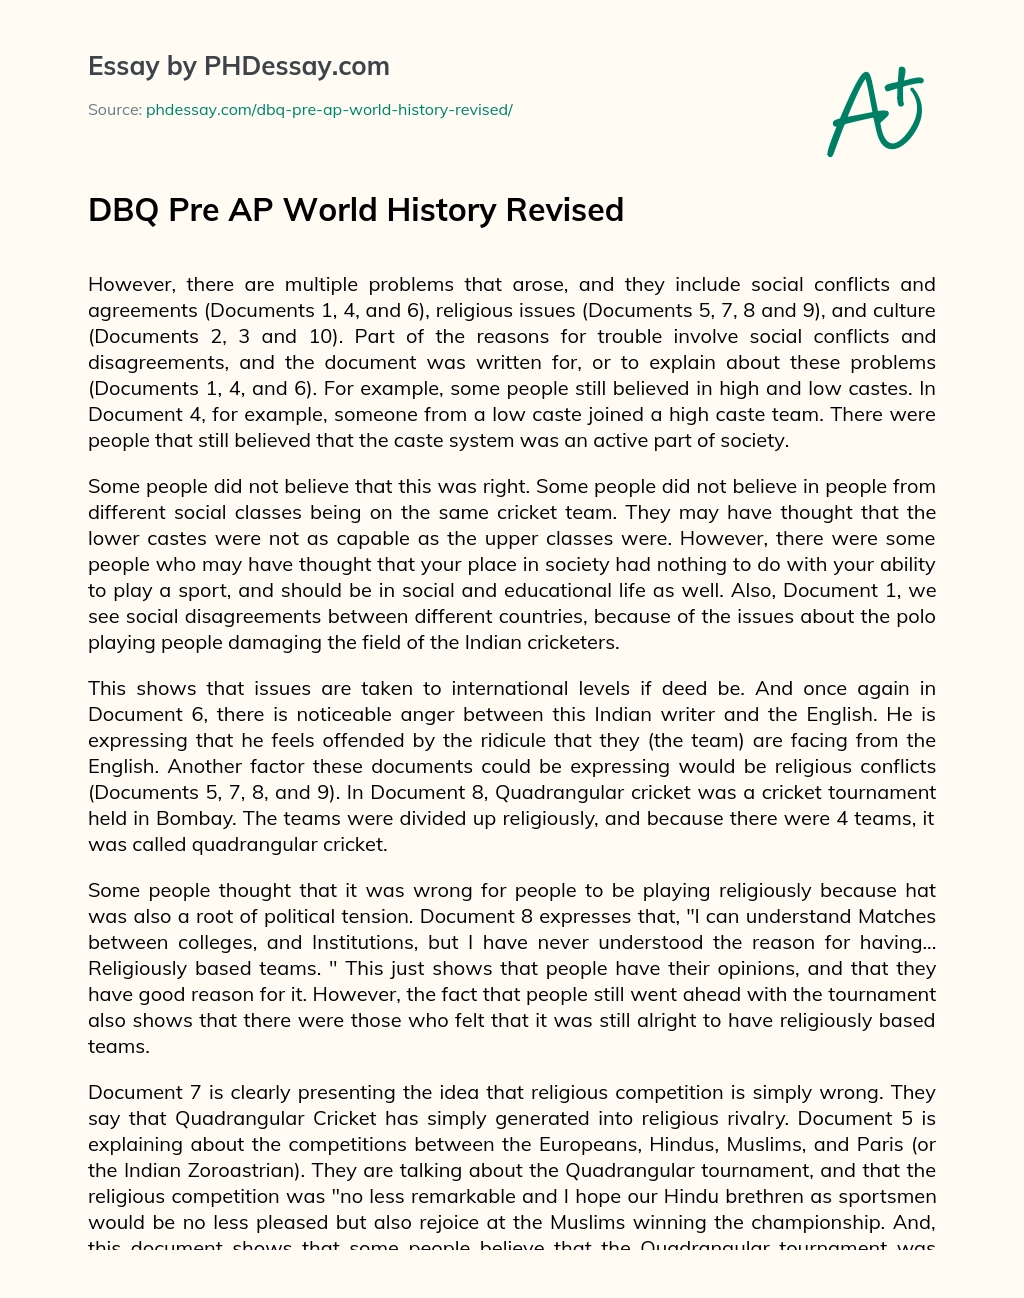 DBQ Pre AP World History Revised essay